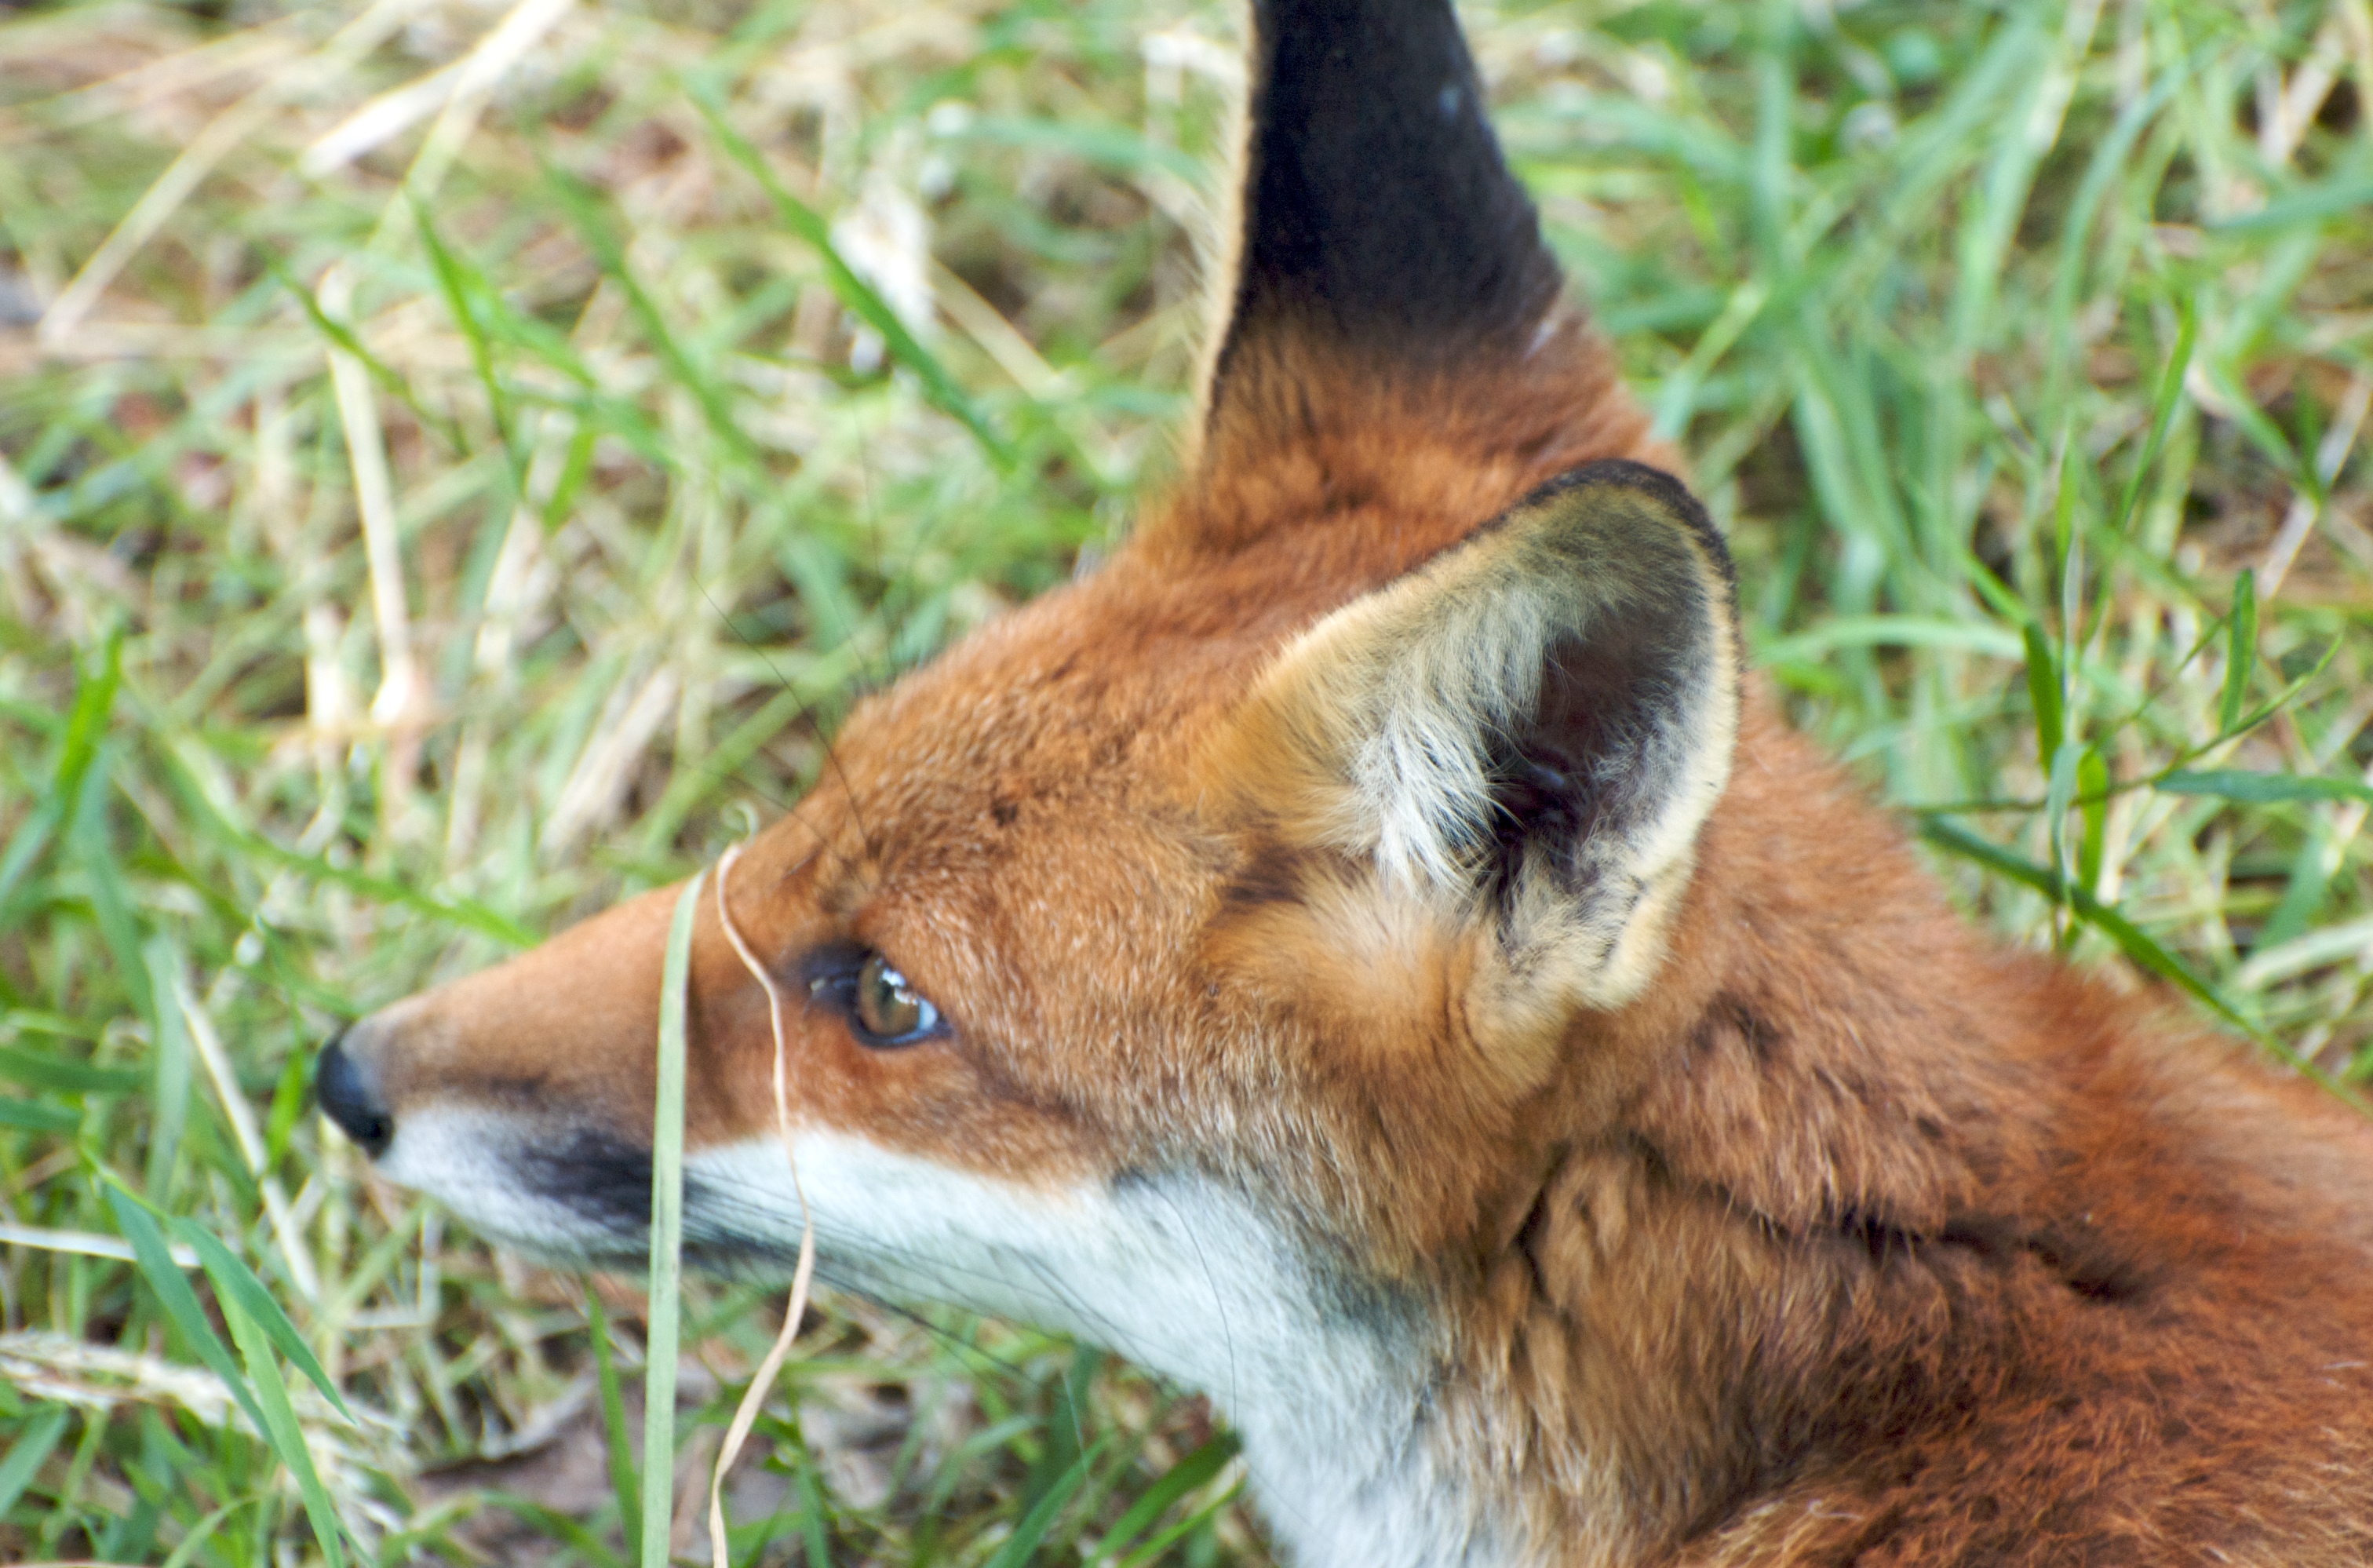 Gray Fox in grass Wallpaper. Most fox